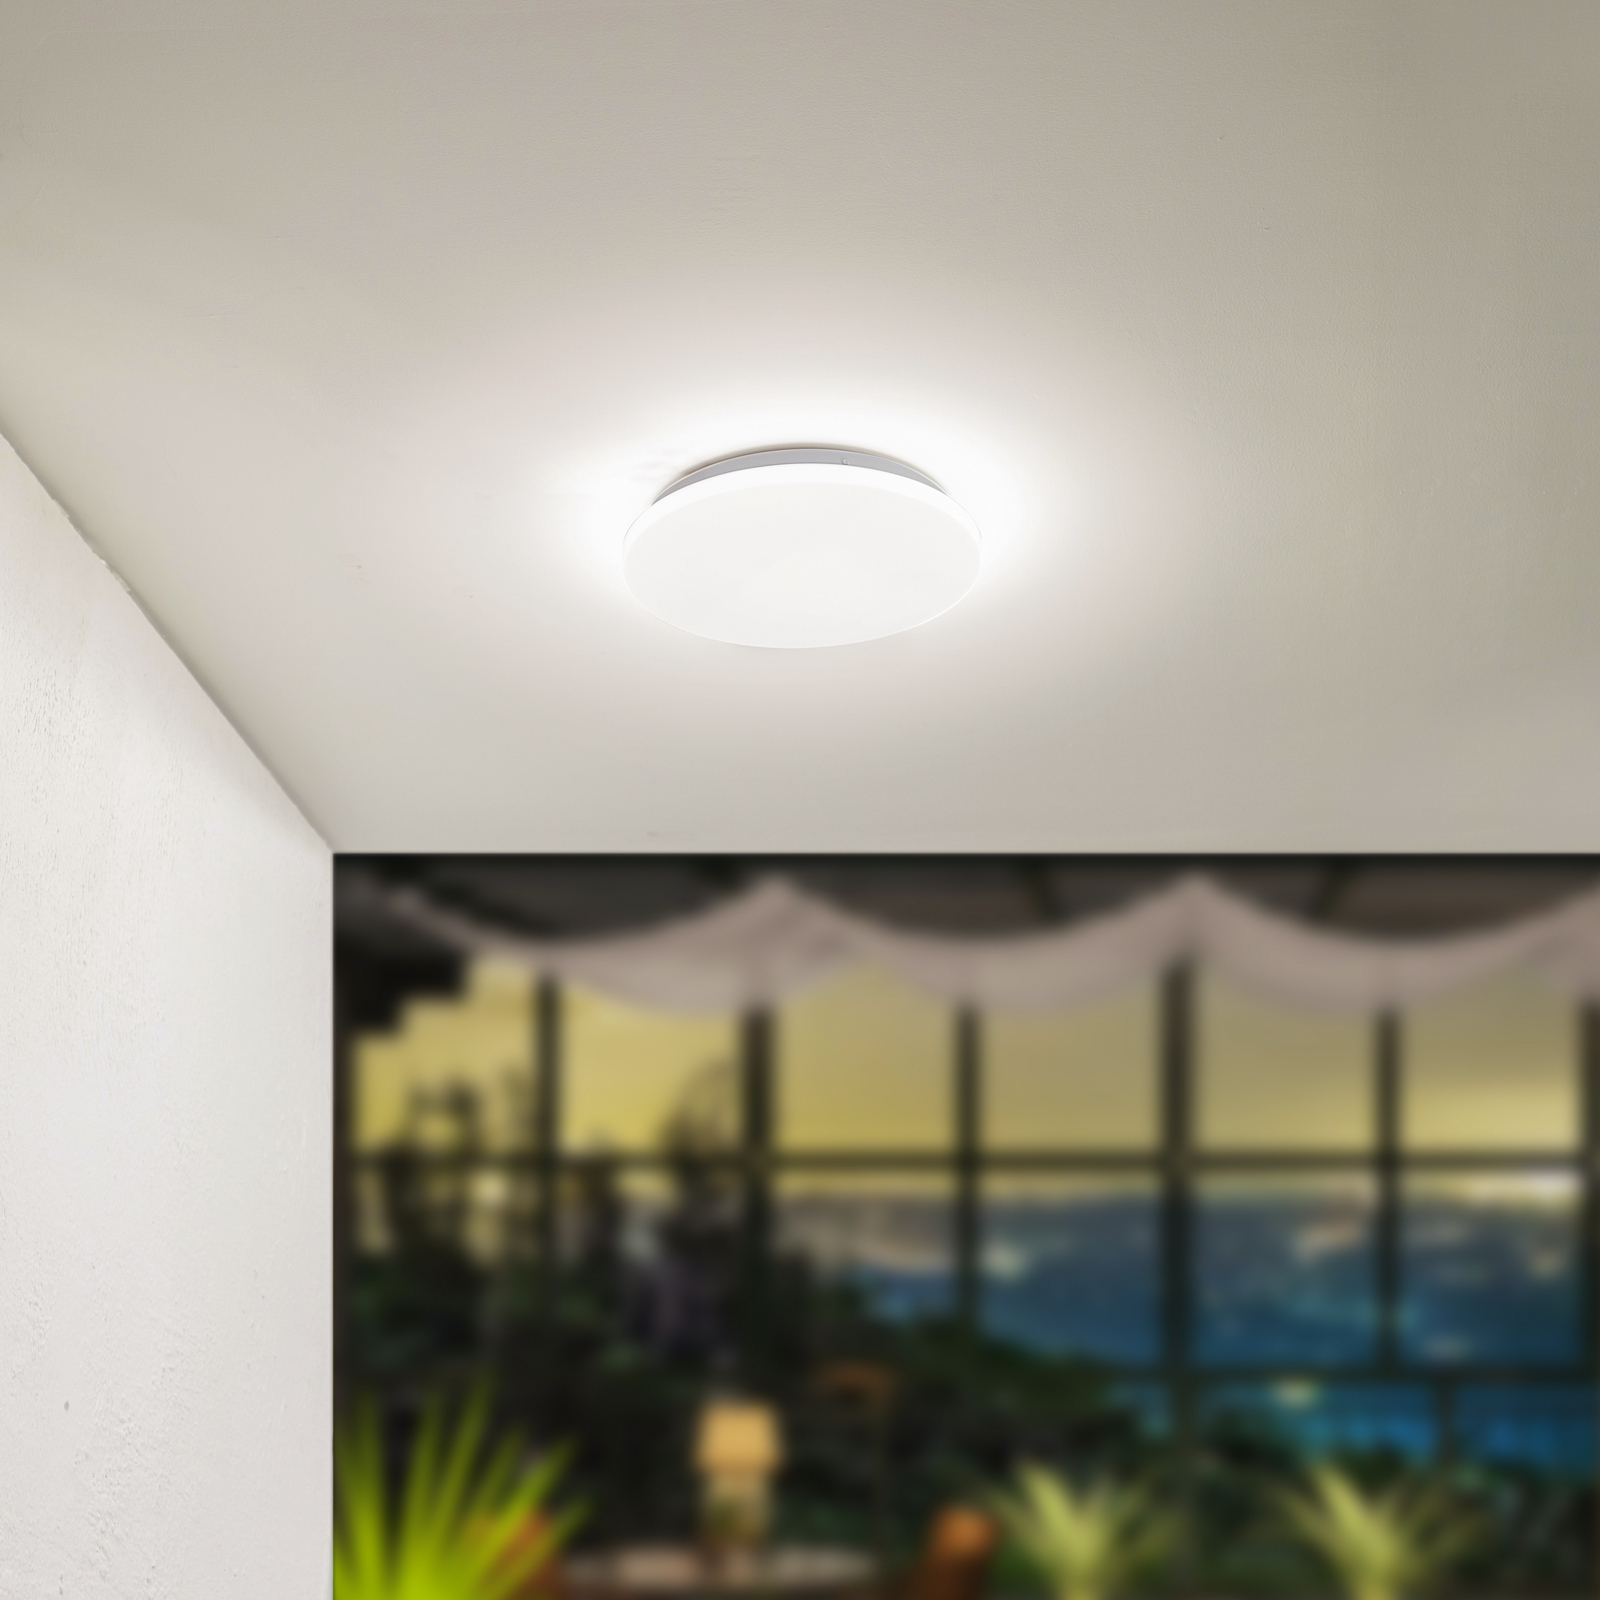 Lindby LED outdoor ceiling light Kirkola, 4000 K, Ø 34 cm, white